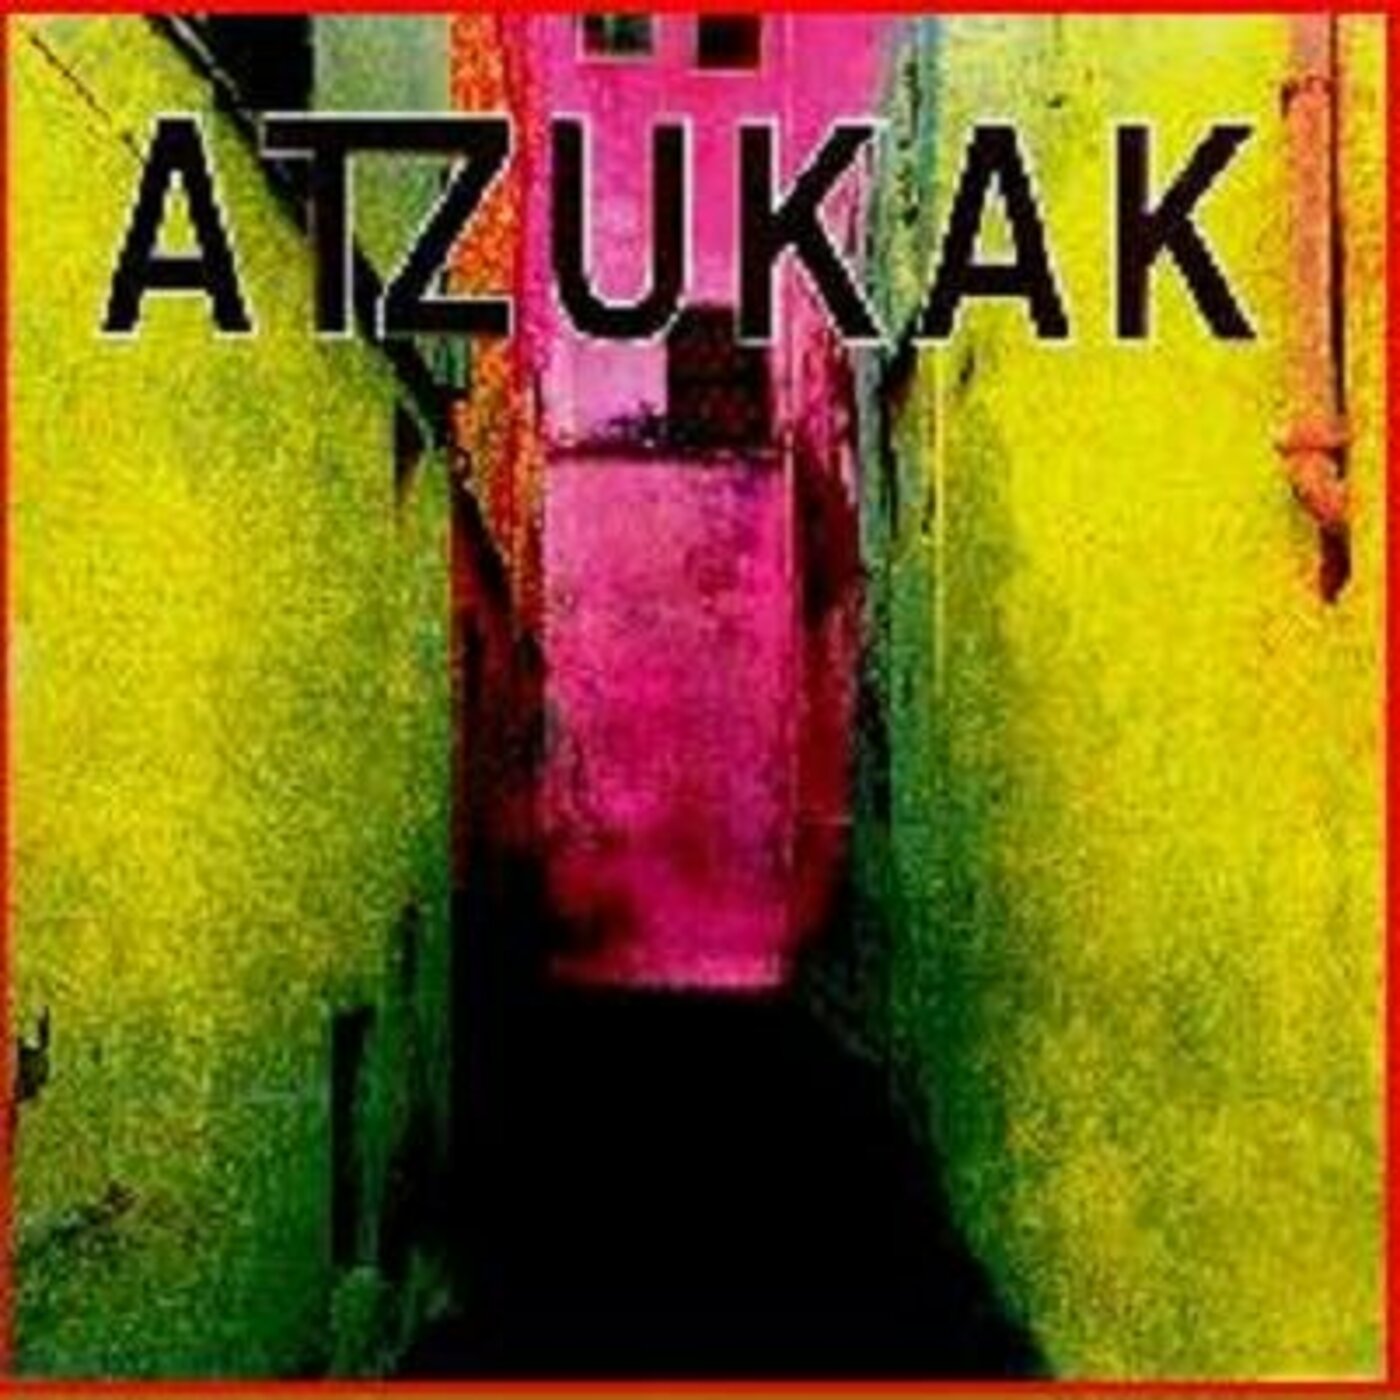 Atzukak - Atzukak | musica en valencià